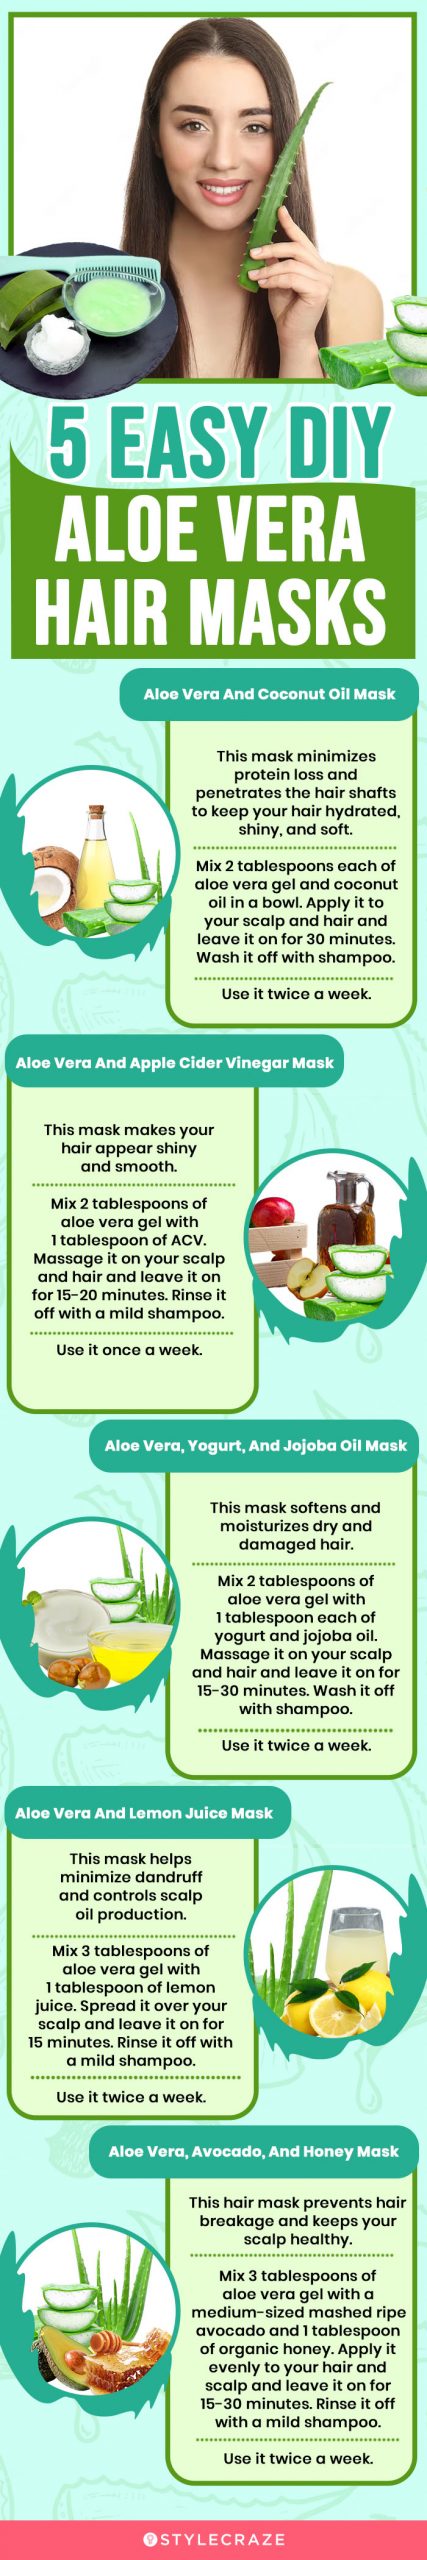 5 easy diy aloe vera hair masks (infographic)